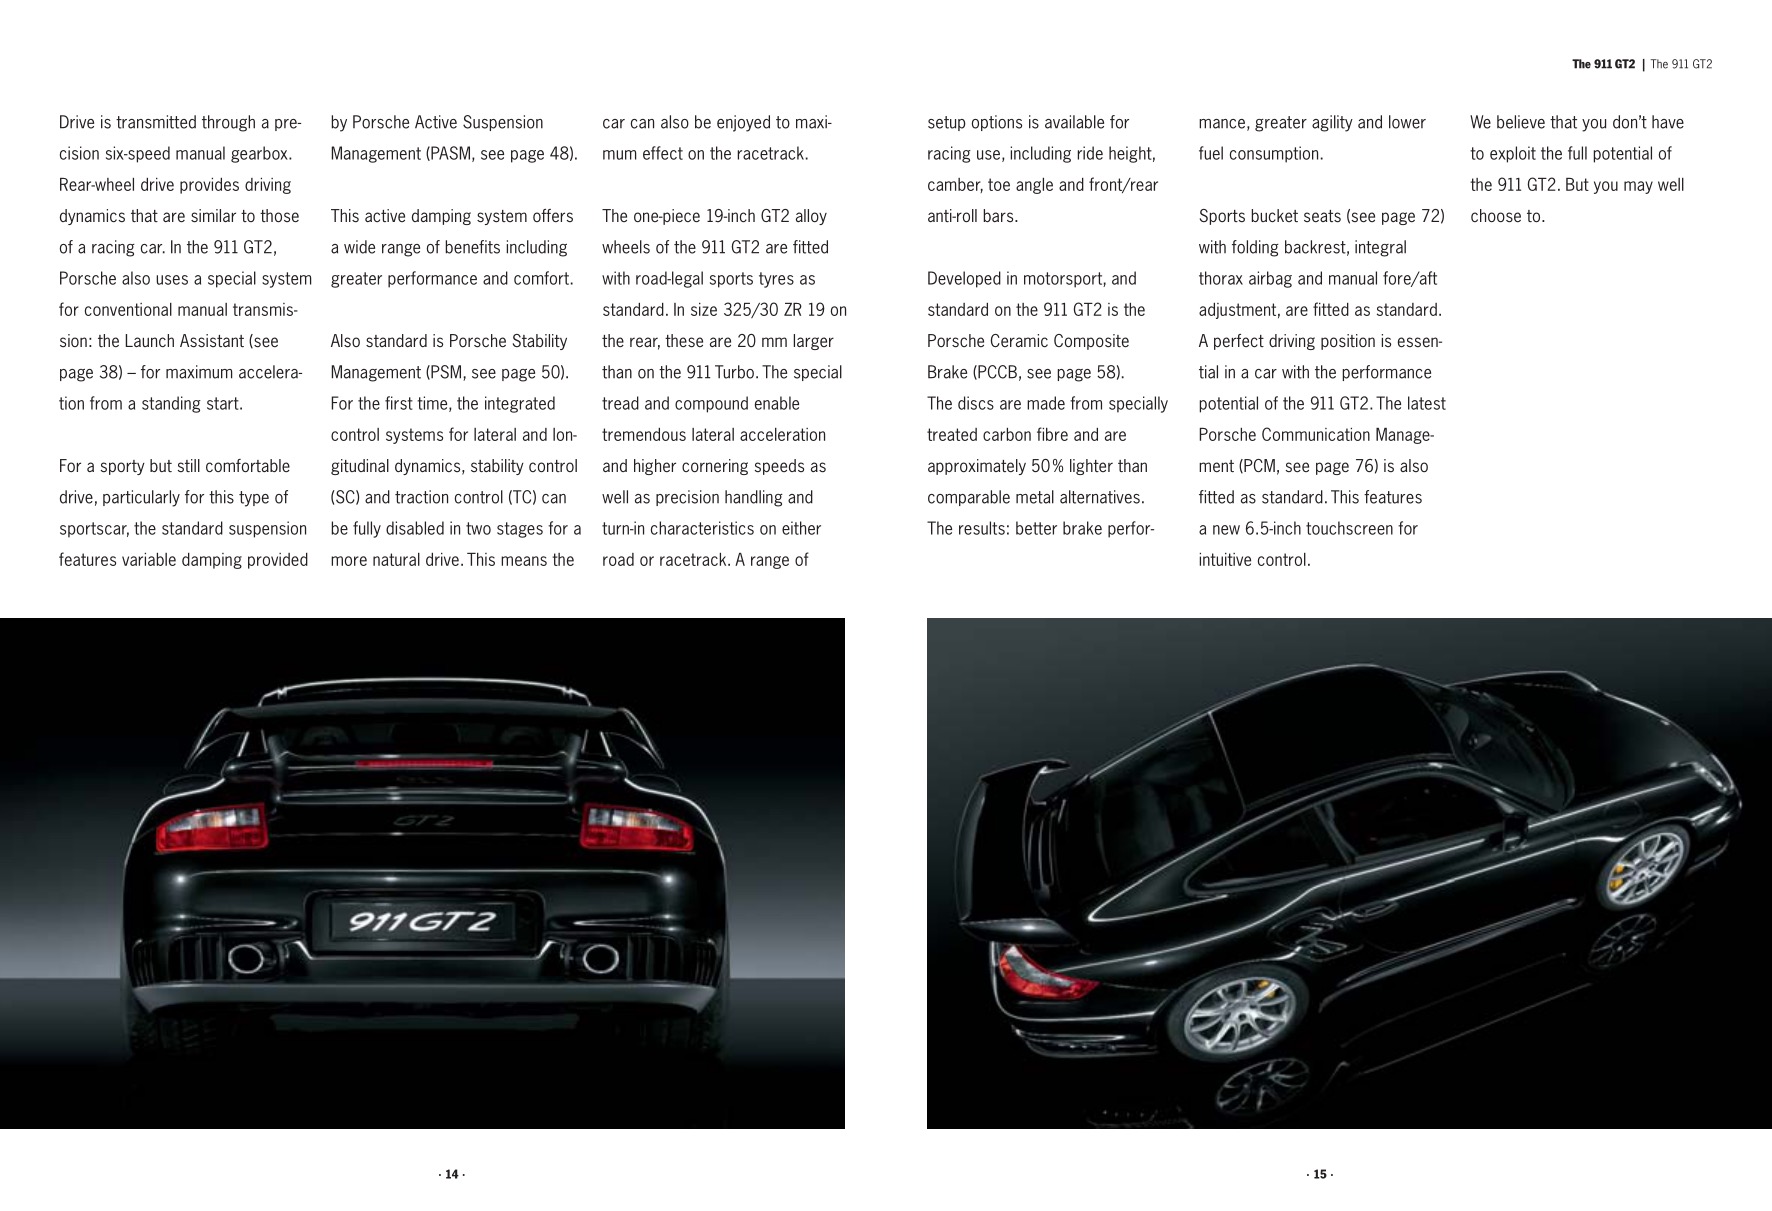 2008 Porsche 911 GT2 Brochure Page 33